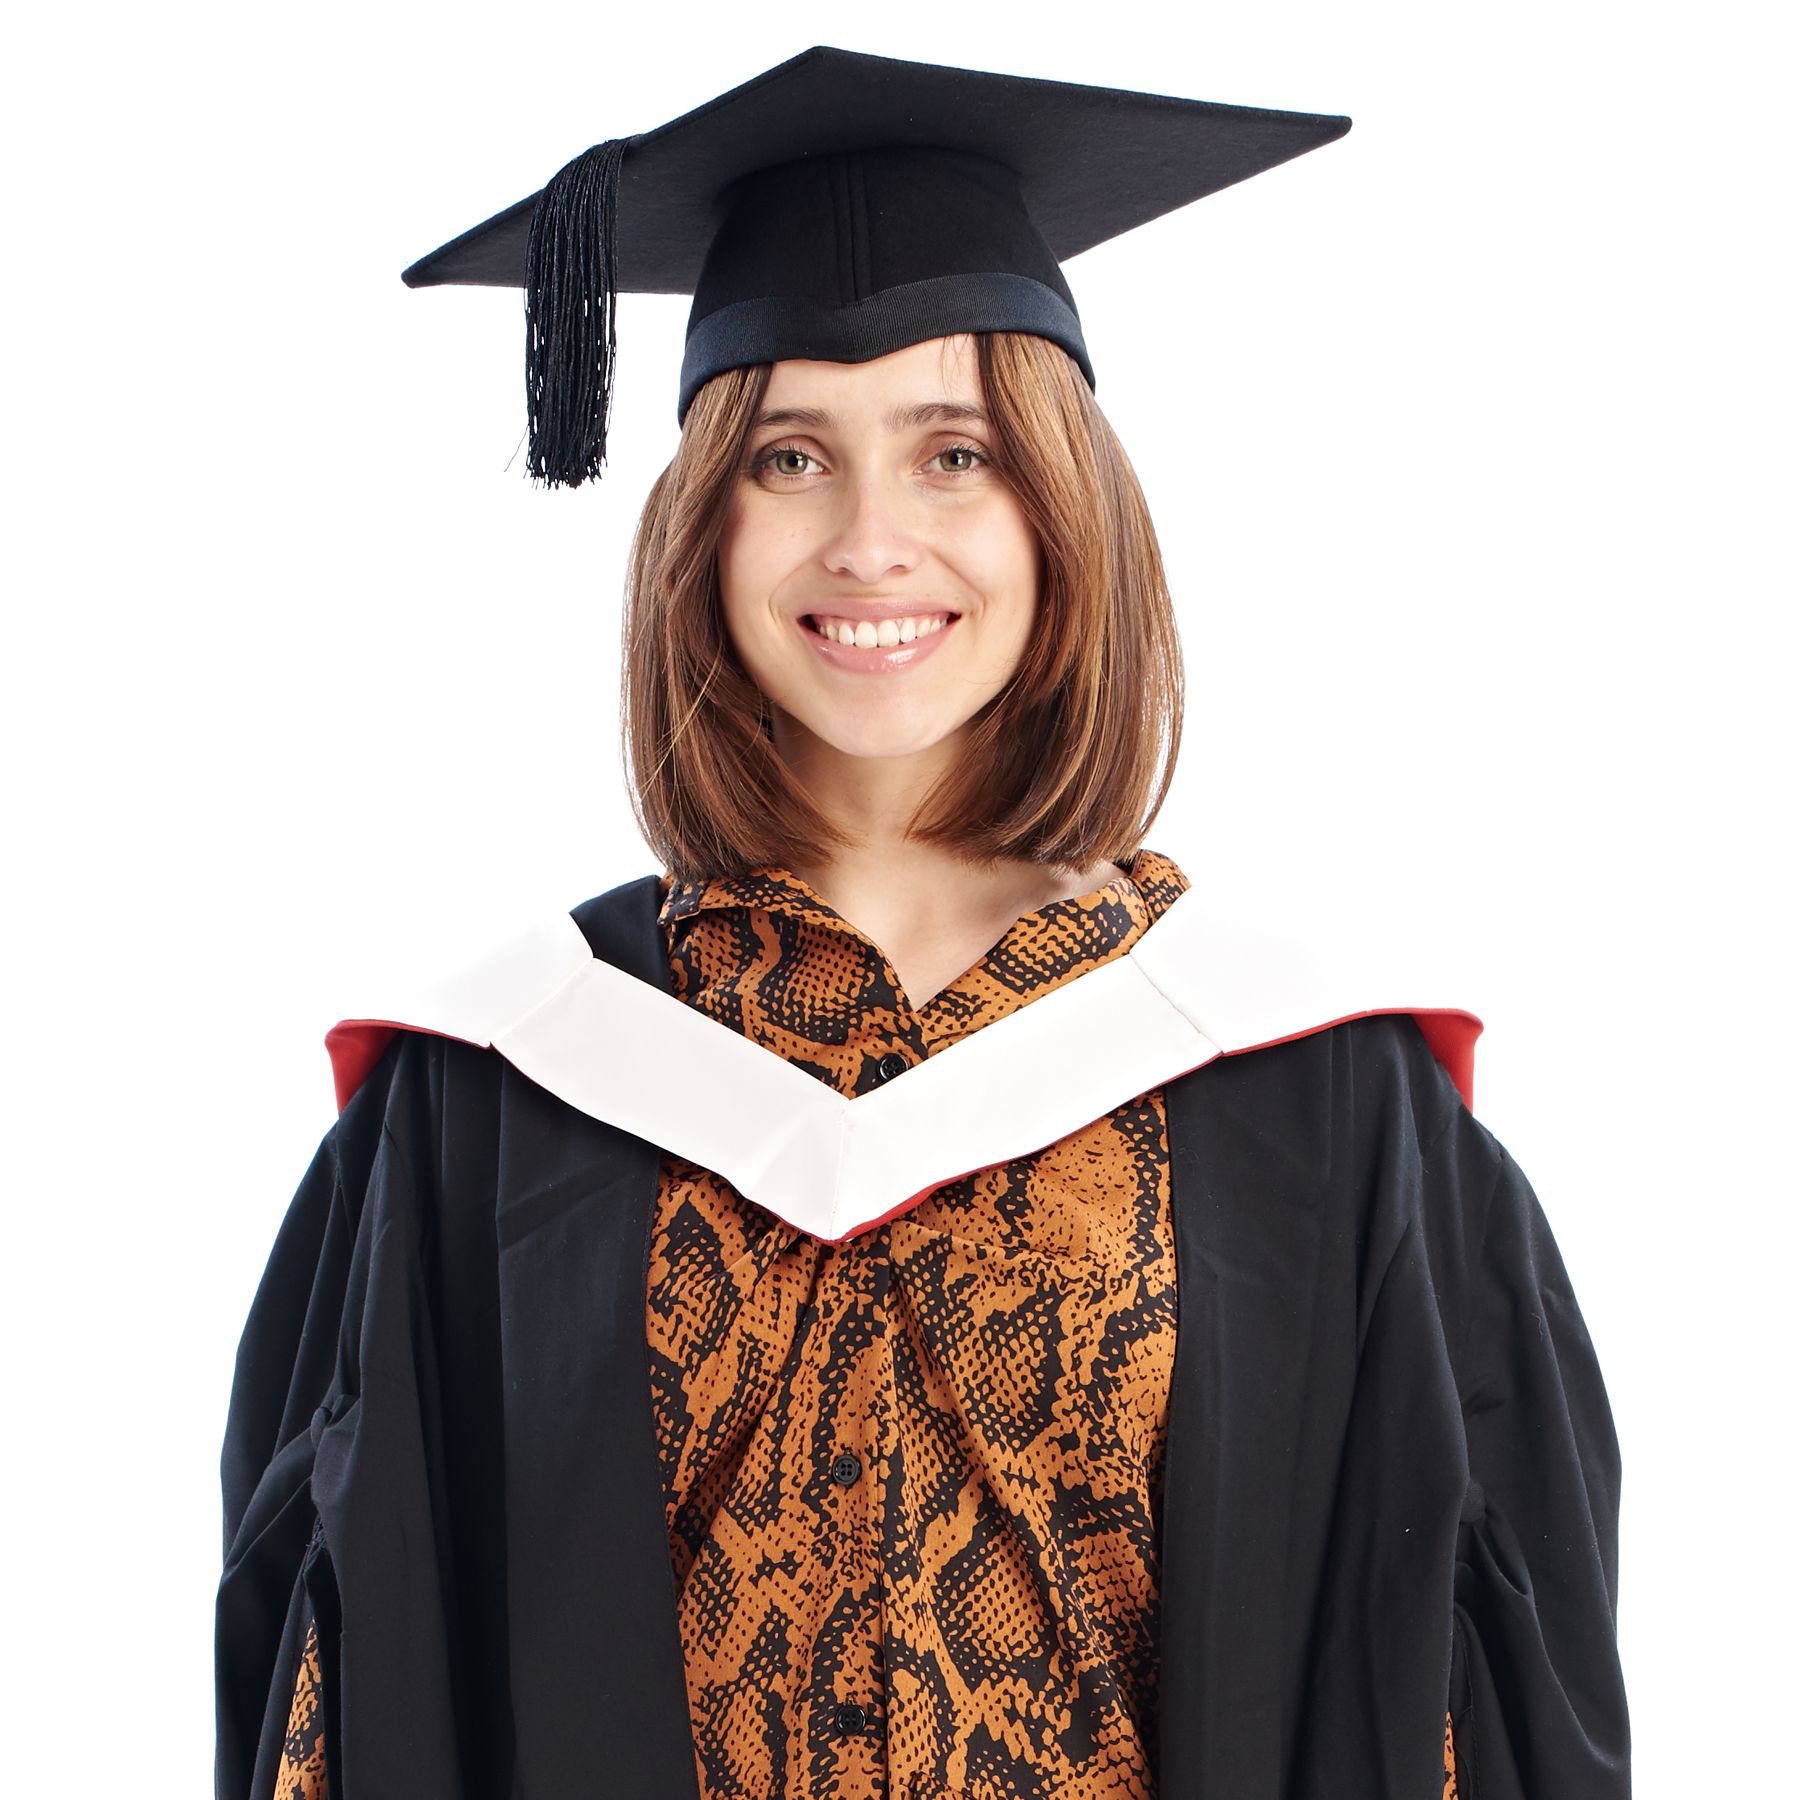 Premium PhD Regalia Rentals includes Gown, Hood, & Cap | Doctoral regalia, University  graduation outfit, Academic regalia